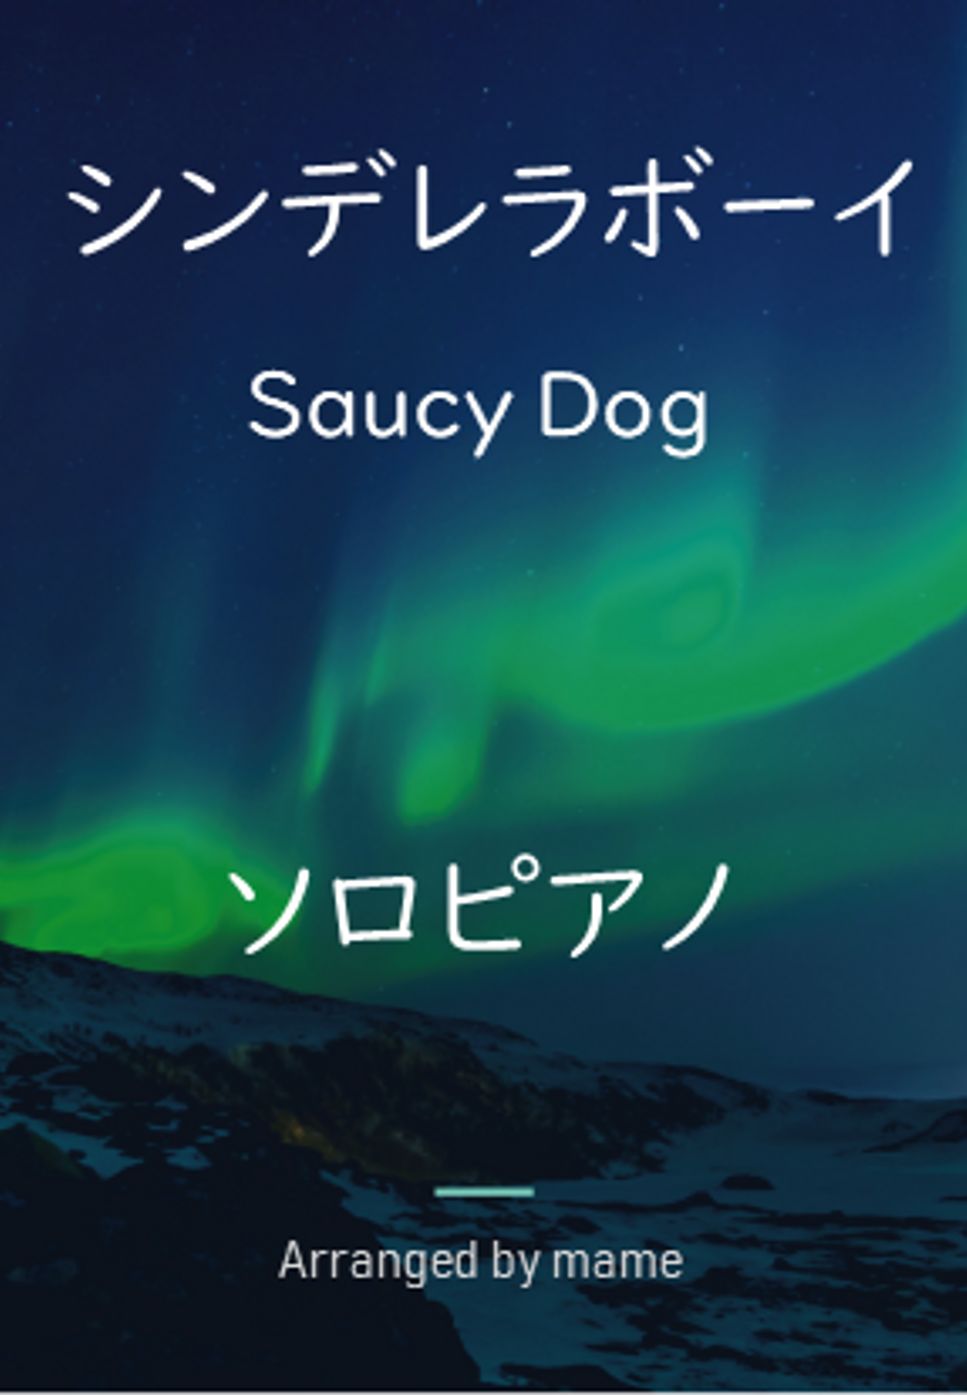 Saucy Dog - シンデレラボーイ (ソロピアノ) by mame